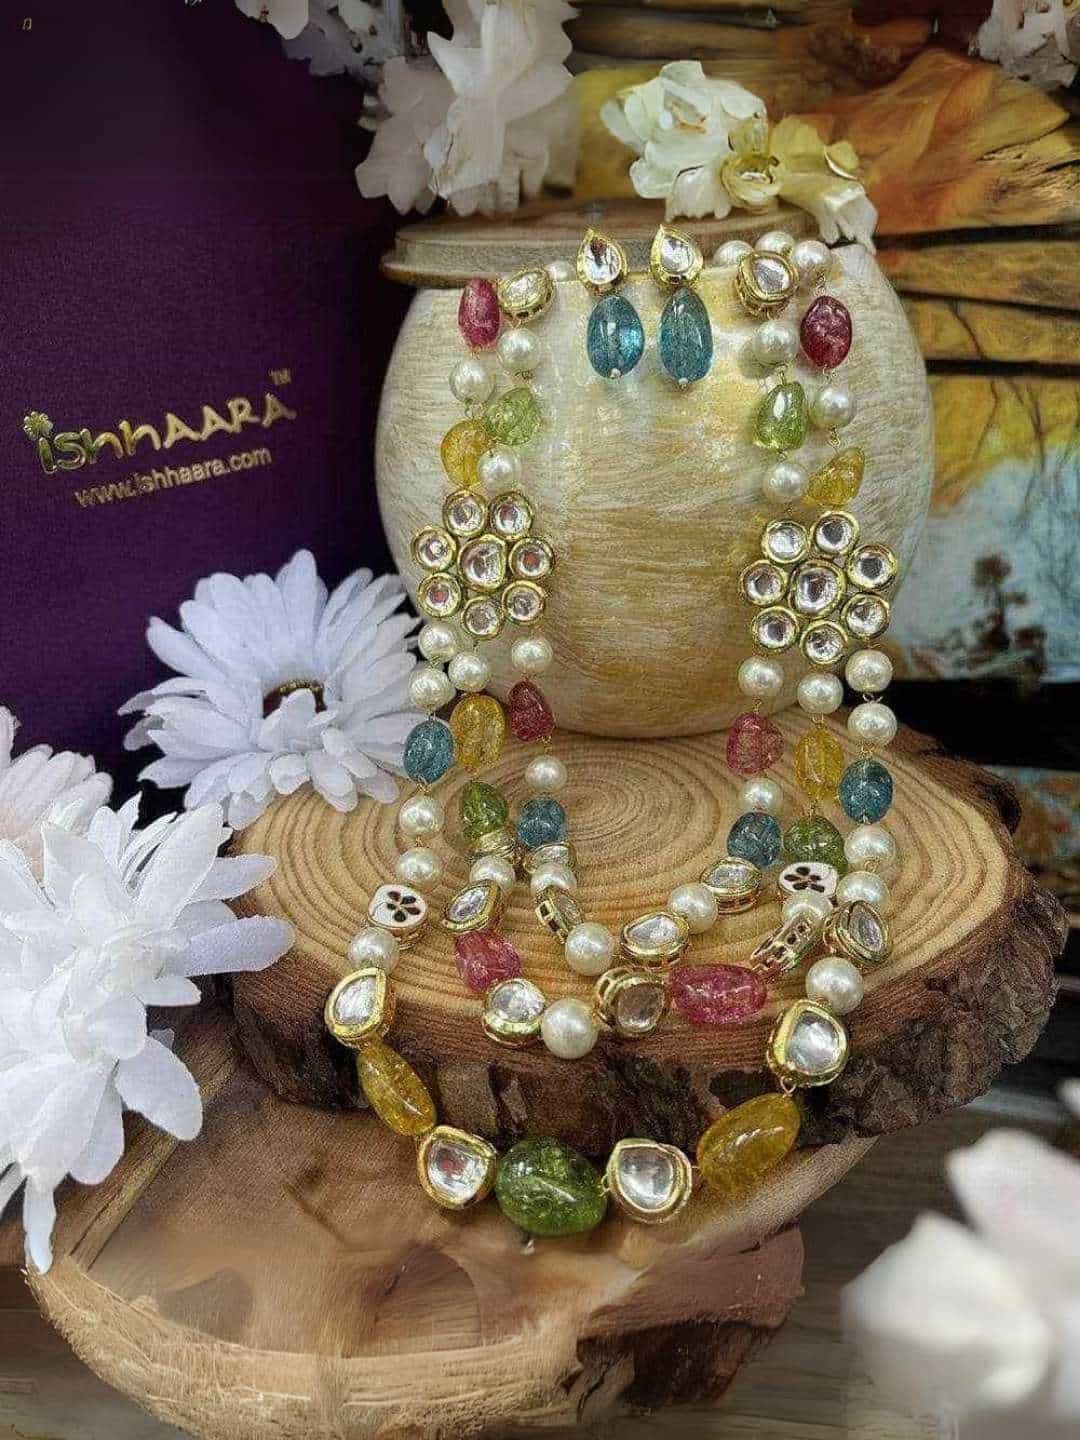 Ishhaara Multi Colored Triple Layered Necklace